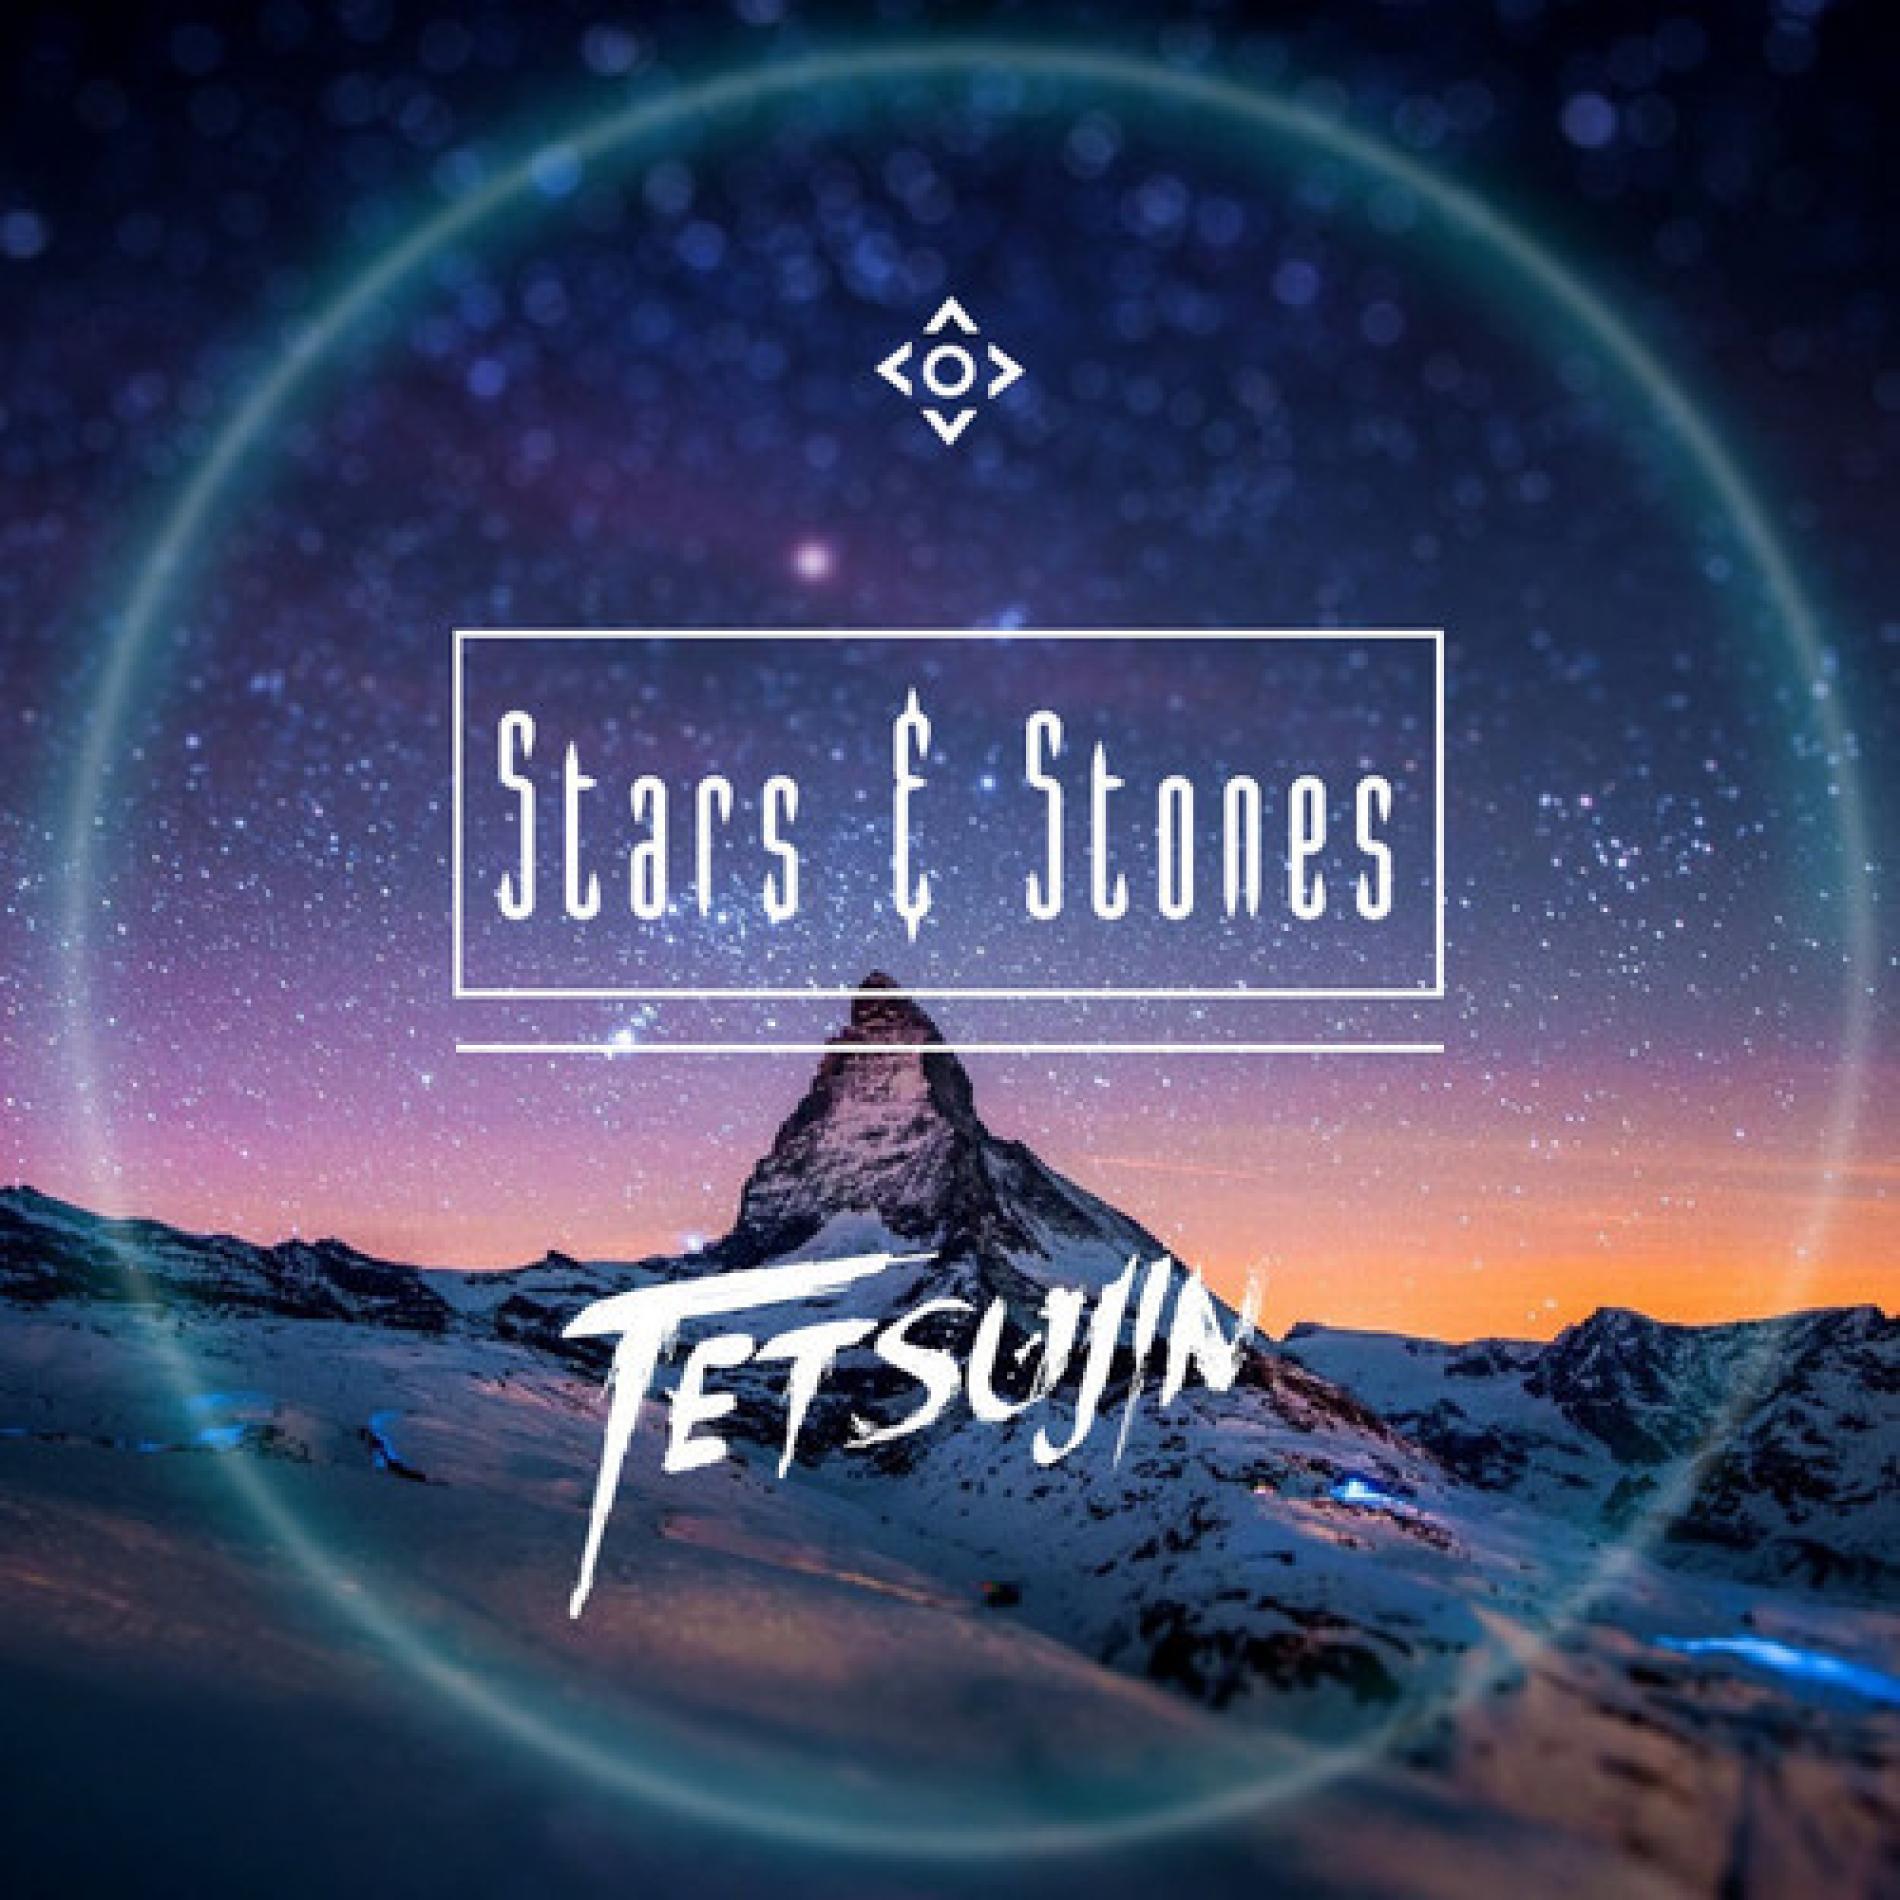 Tetsujin: Stars & Stones (Original Mix)